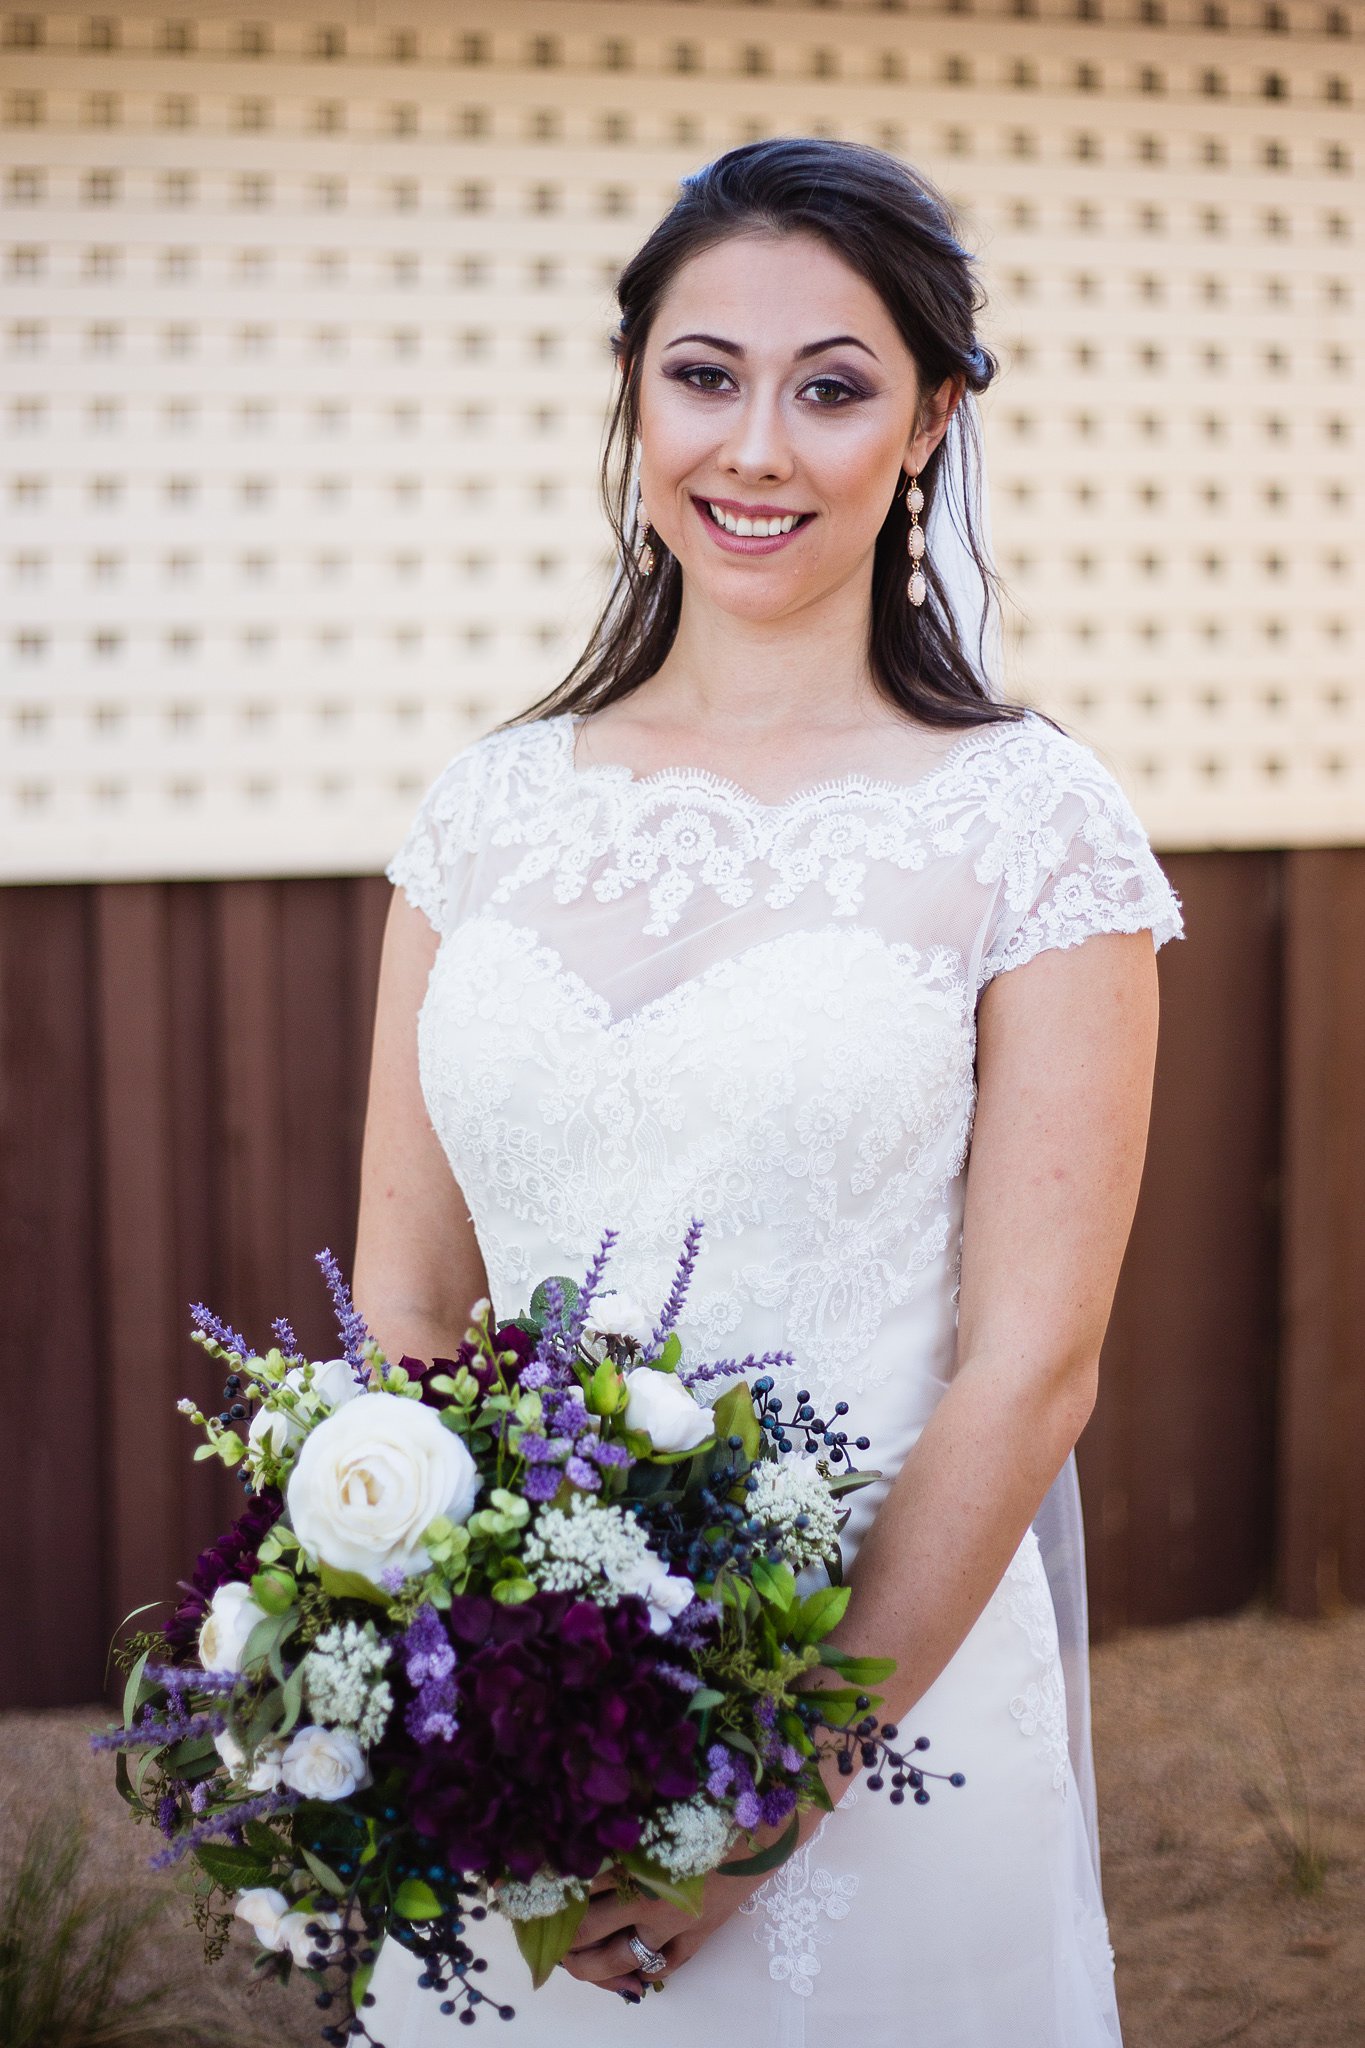 Bride holding purple and white bridal bouquet by Phoenix wedding photographer PMA Photography.